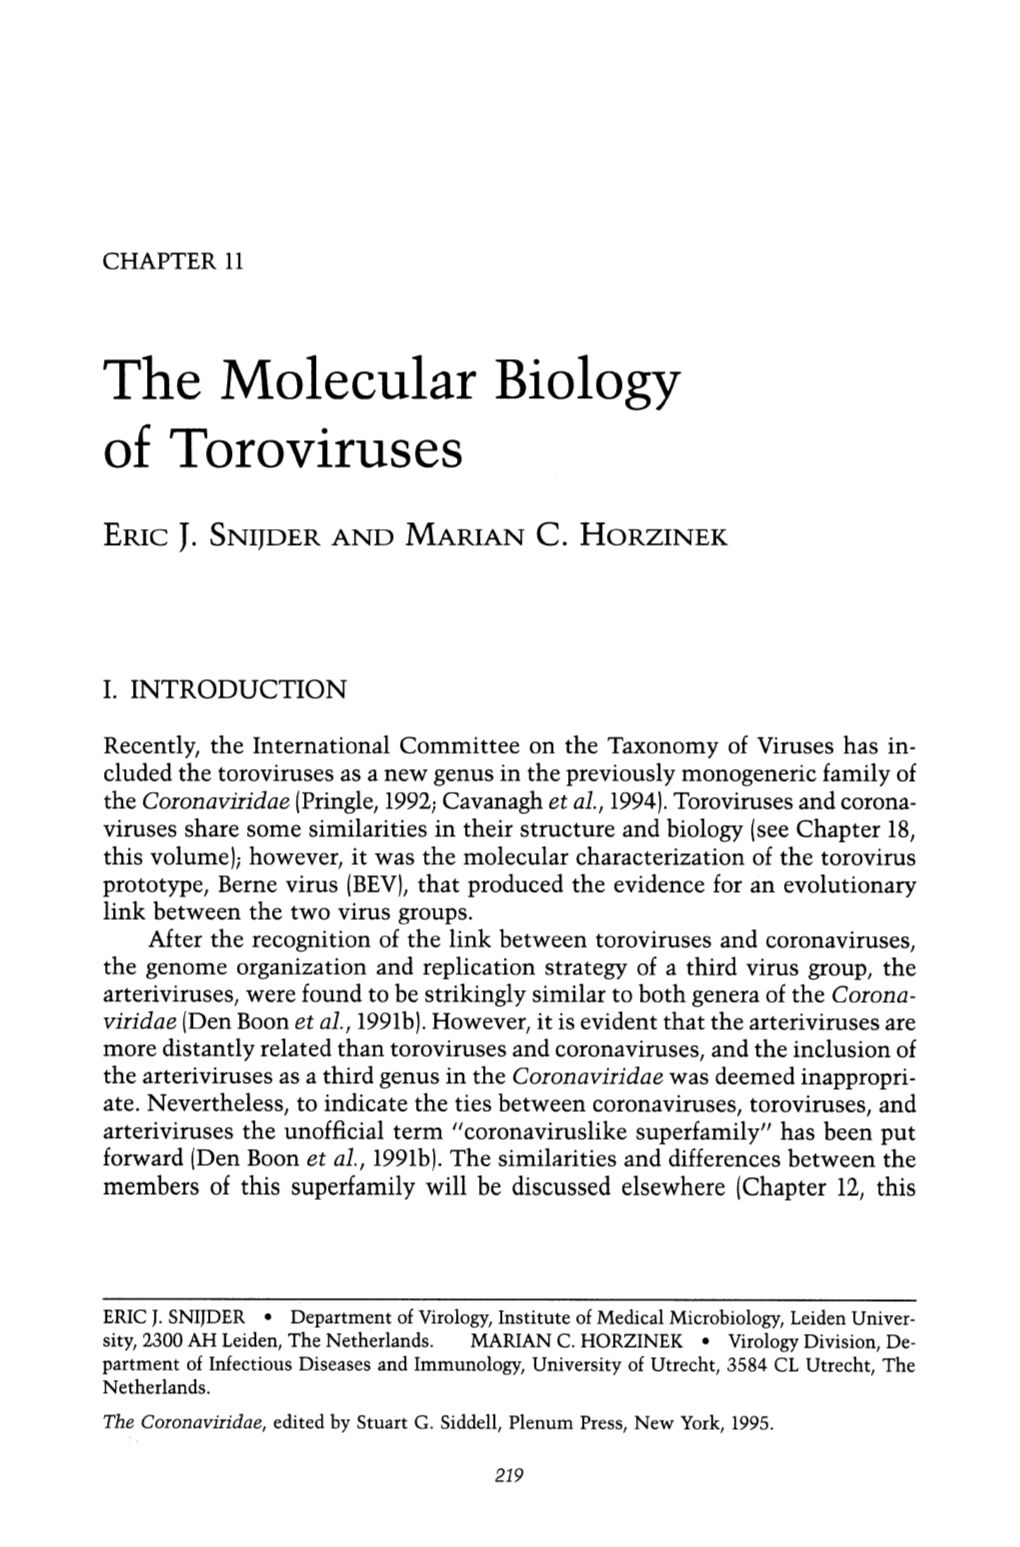 The Molecular Biology of Toroviruses